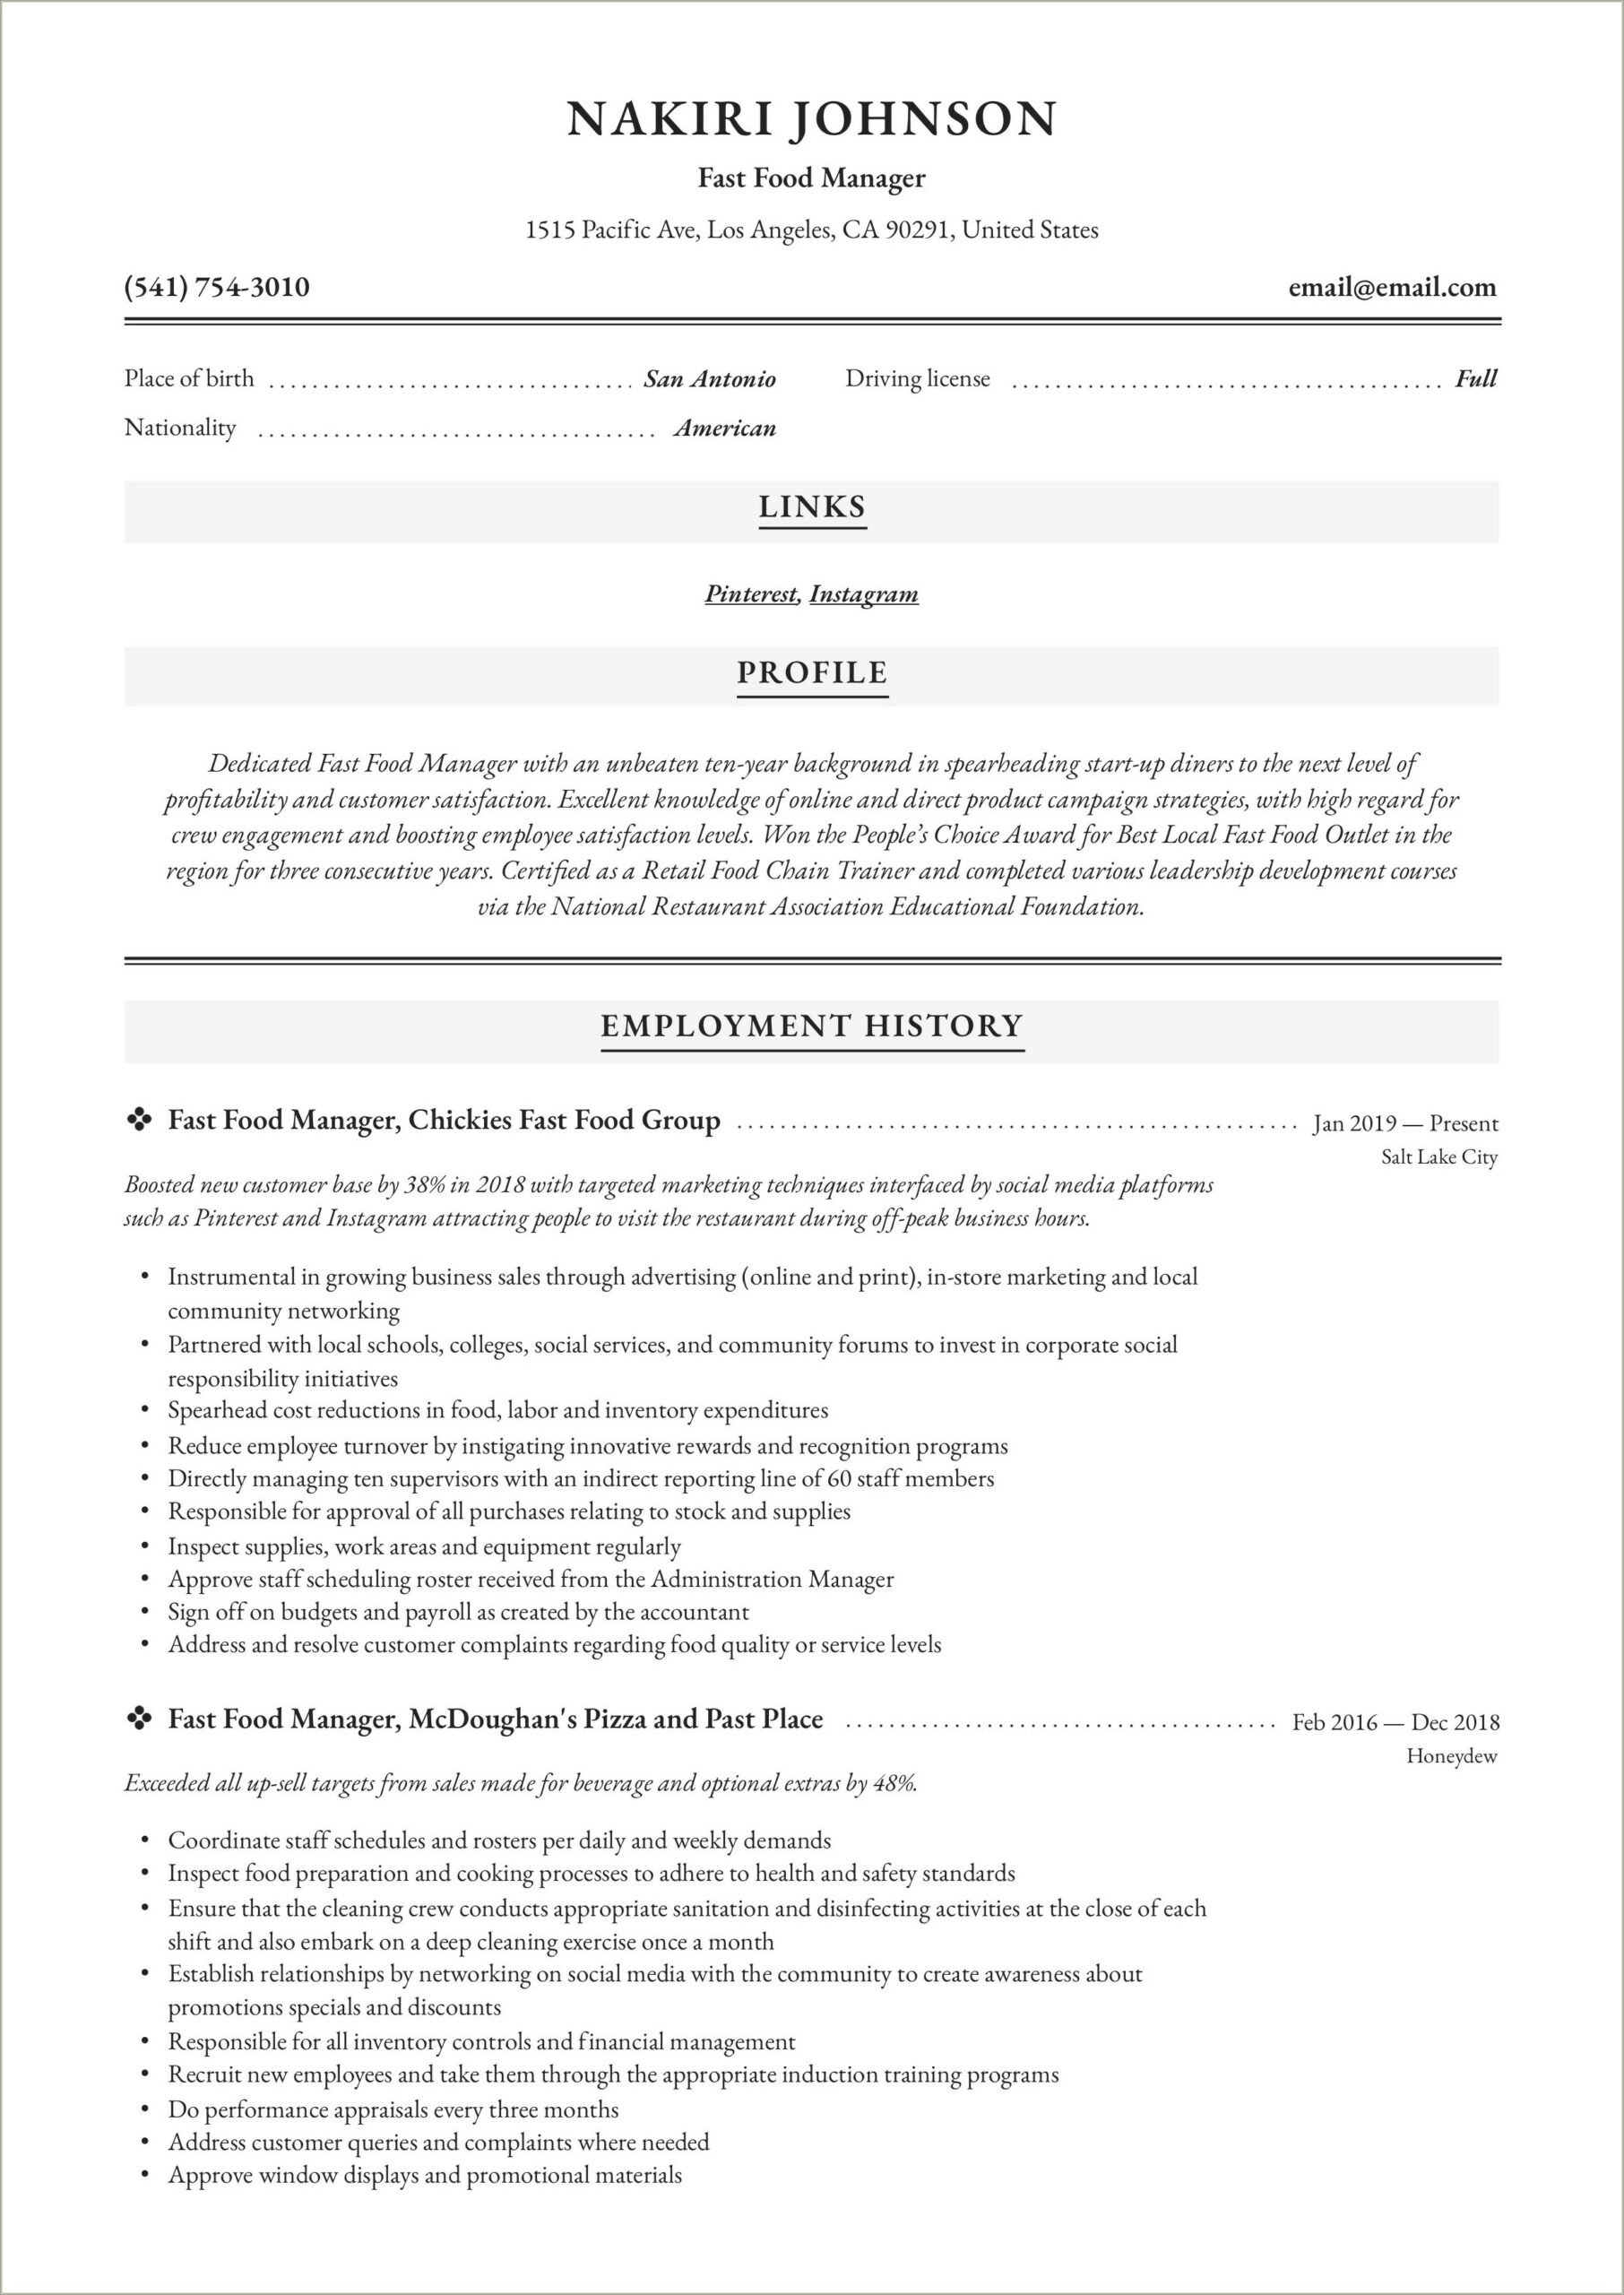 Resume Sample For Assistant Restaurant Manager